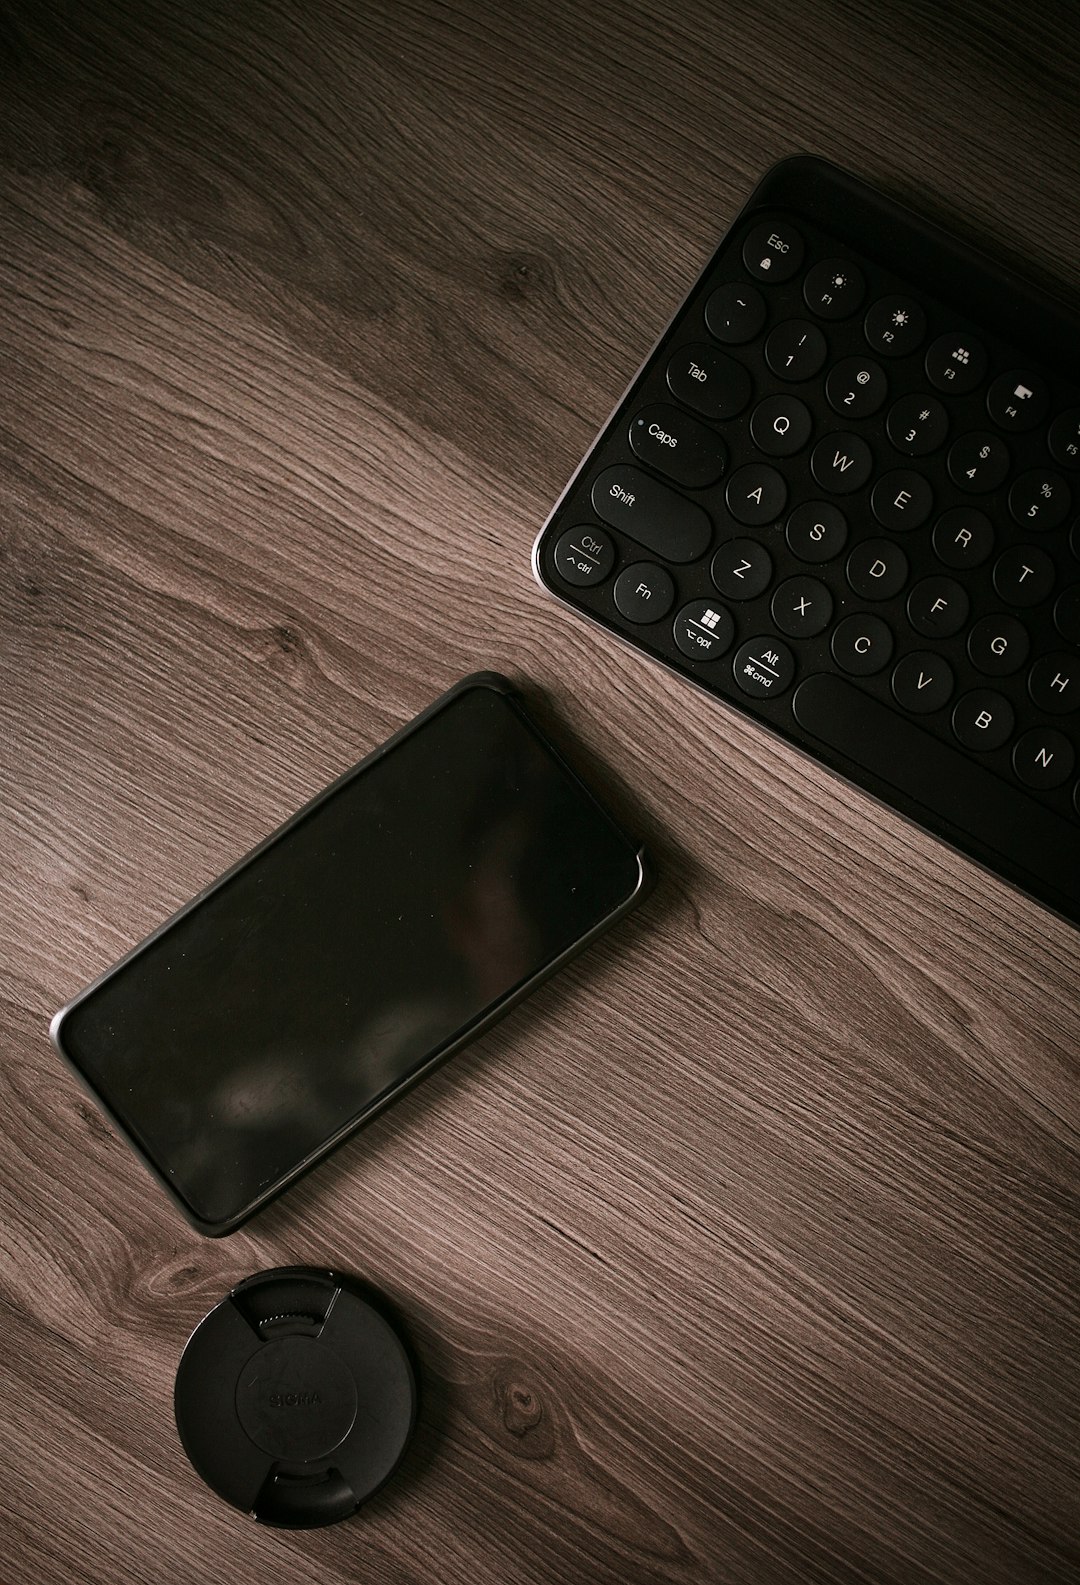 black iphone 7 beside black logitech cordless computer keyboard